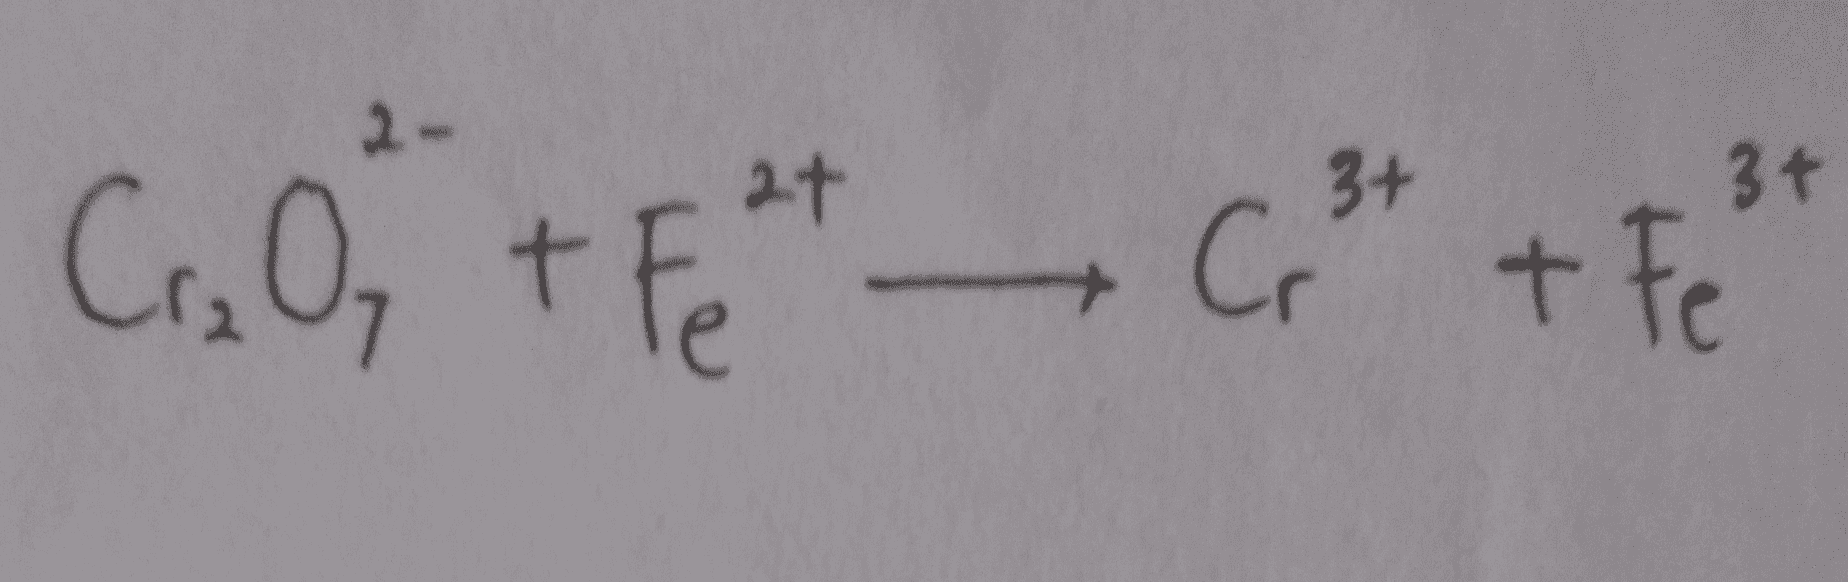 2- 3+ Cr₂O + F + C + Fe 